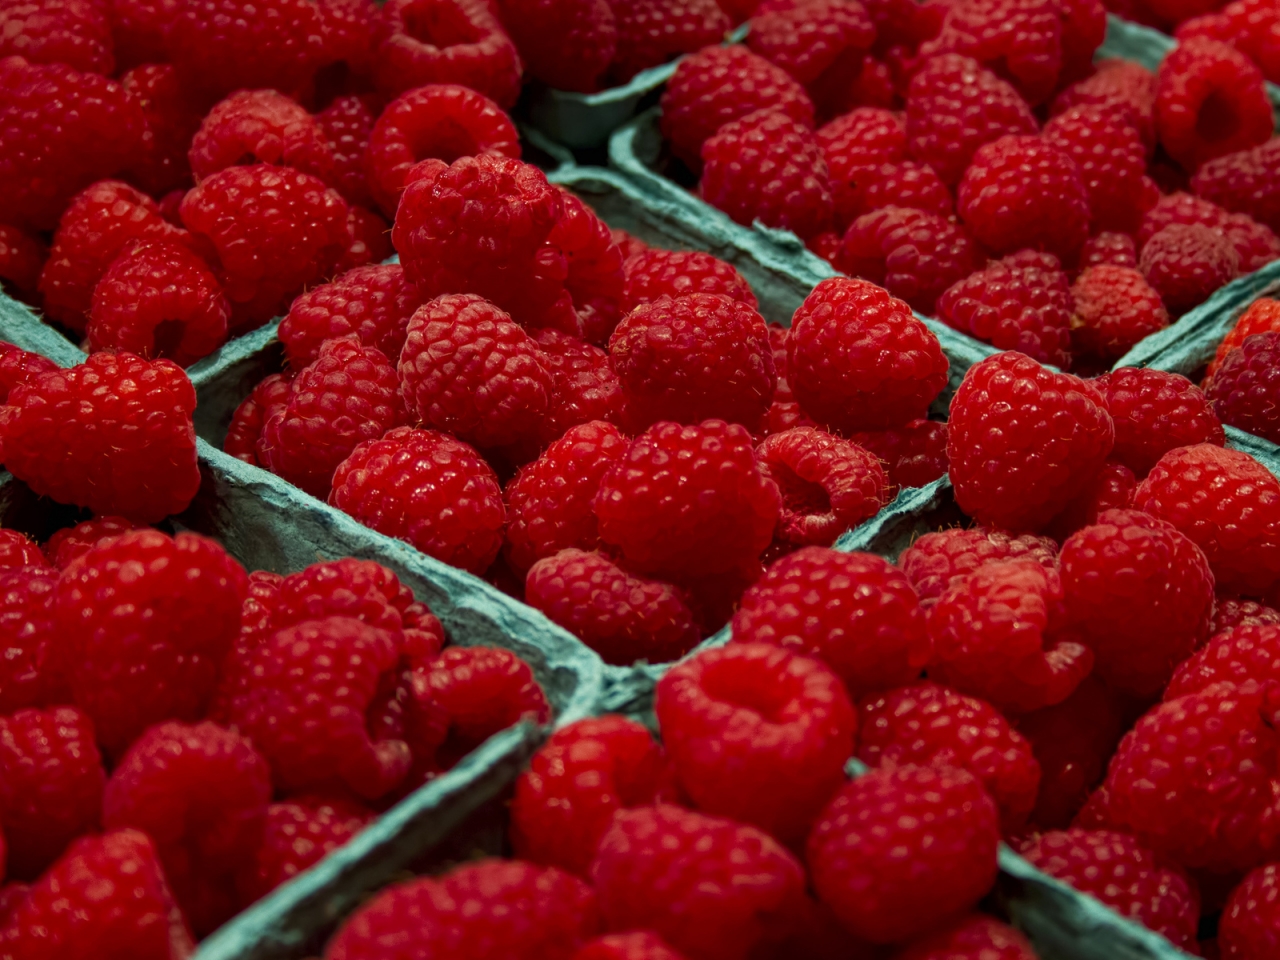 Raspberries  for 1280 x 960 resolution